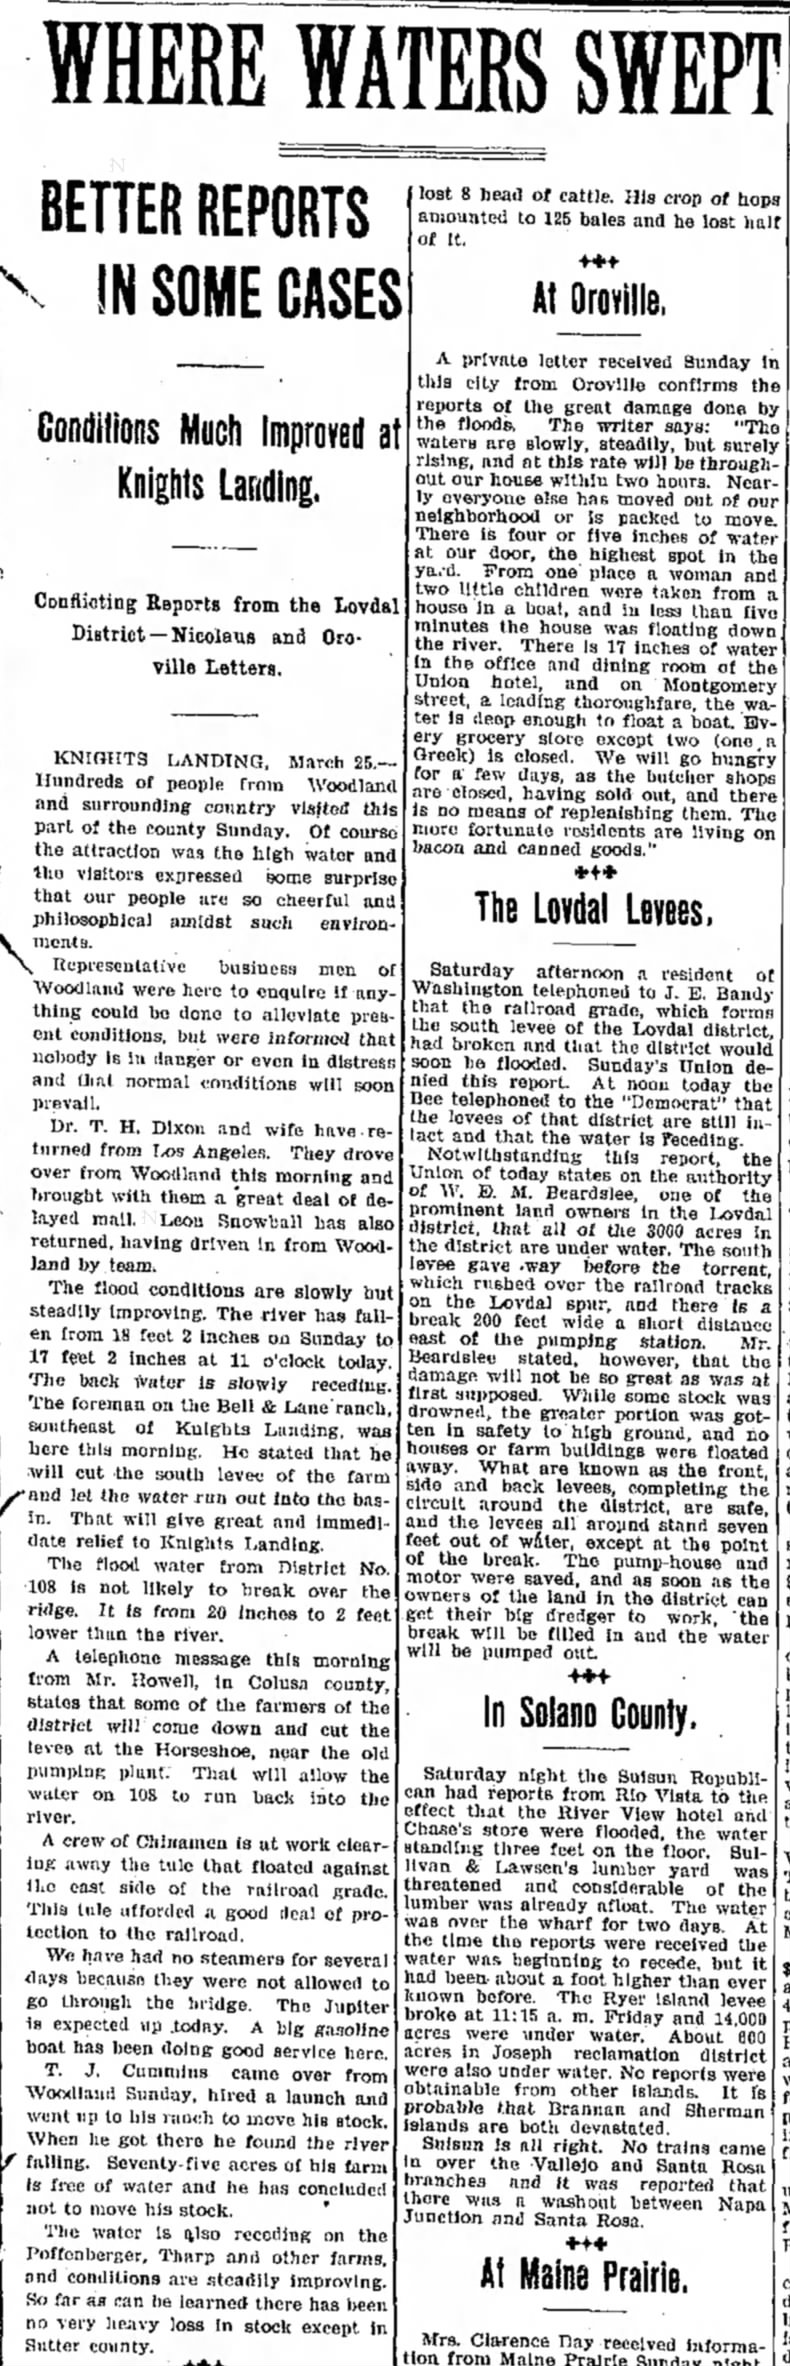 W. E. M. Beardslee, 25 March 1907, Woodland Daily Democrat, Pg 1, Col 1&2